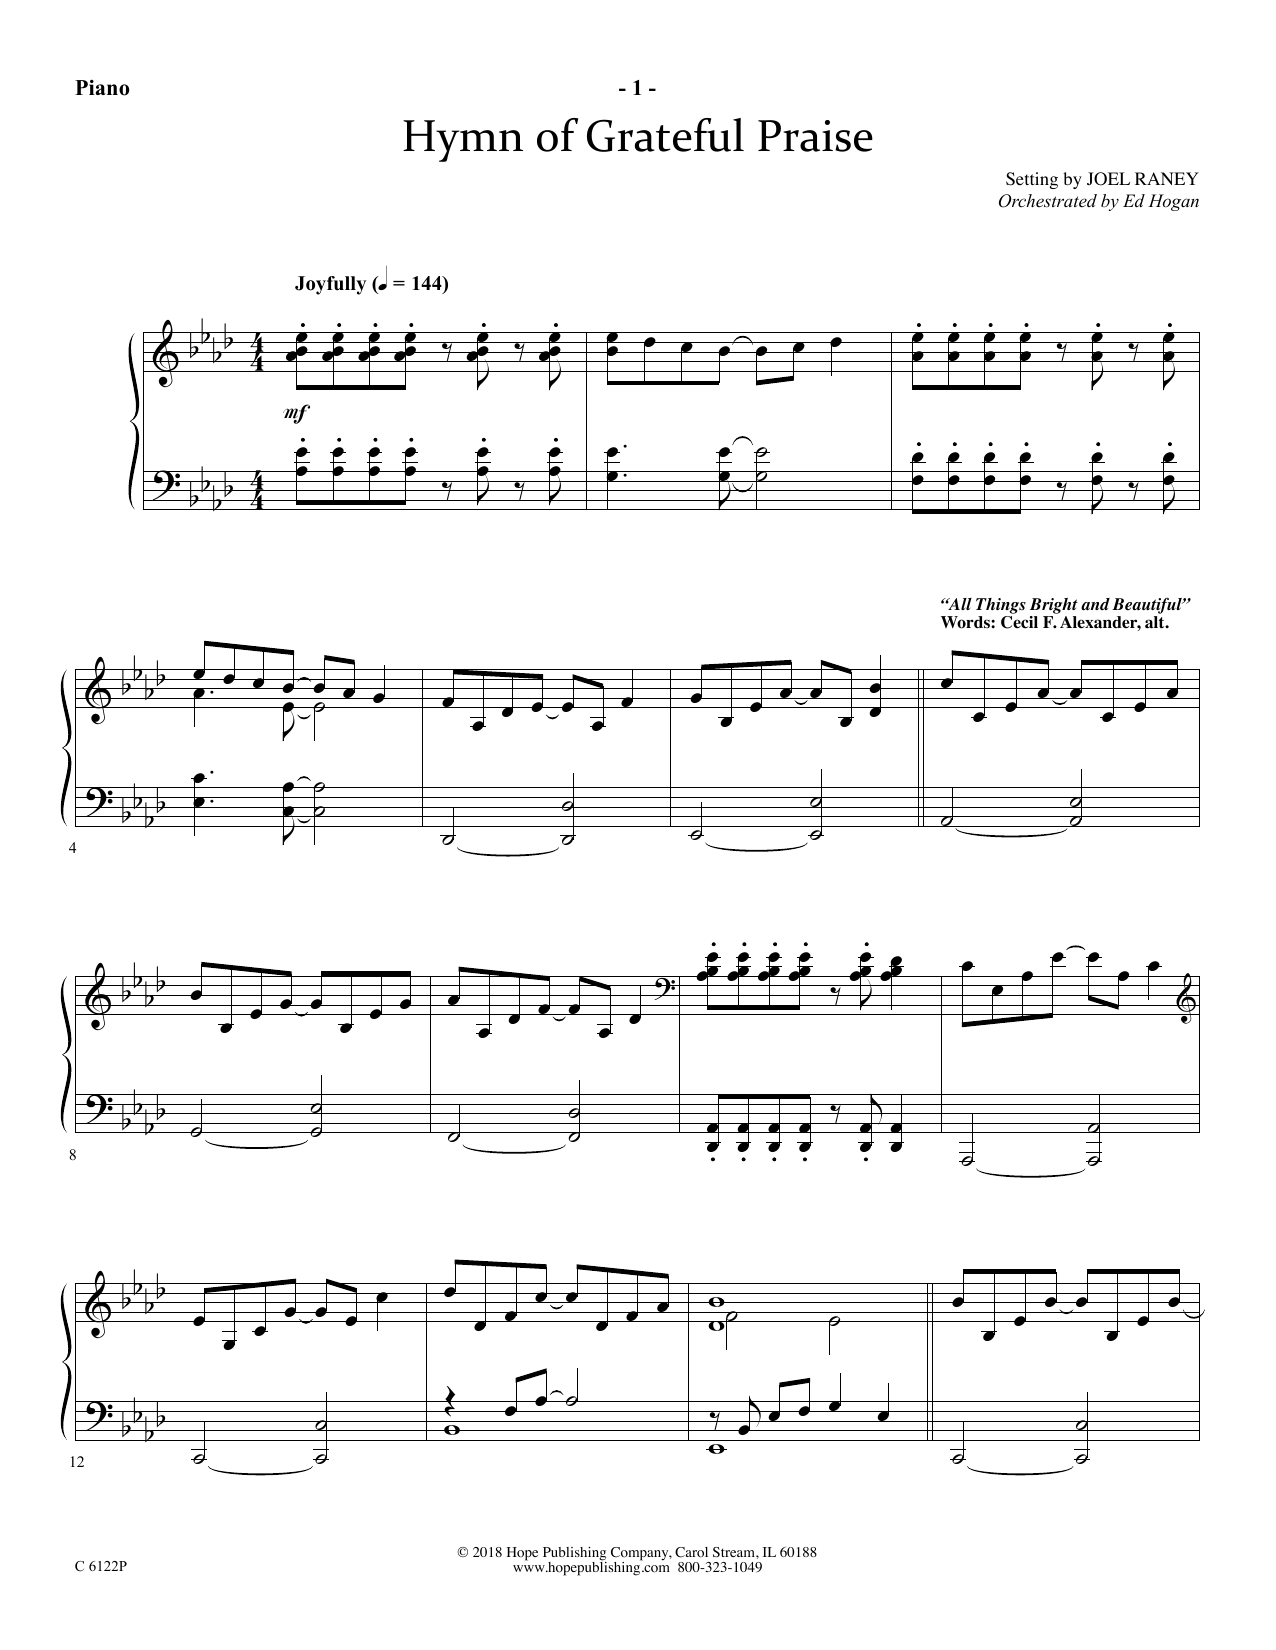 Joel Raney Hymn Of Grateful Praise - Piano Sheet Music Notes & Chords for Choir Instrumental Pak - Download or Print PDF